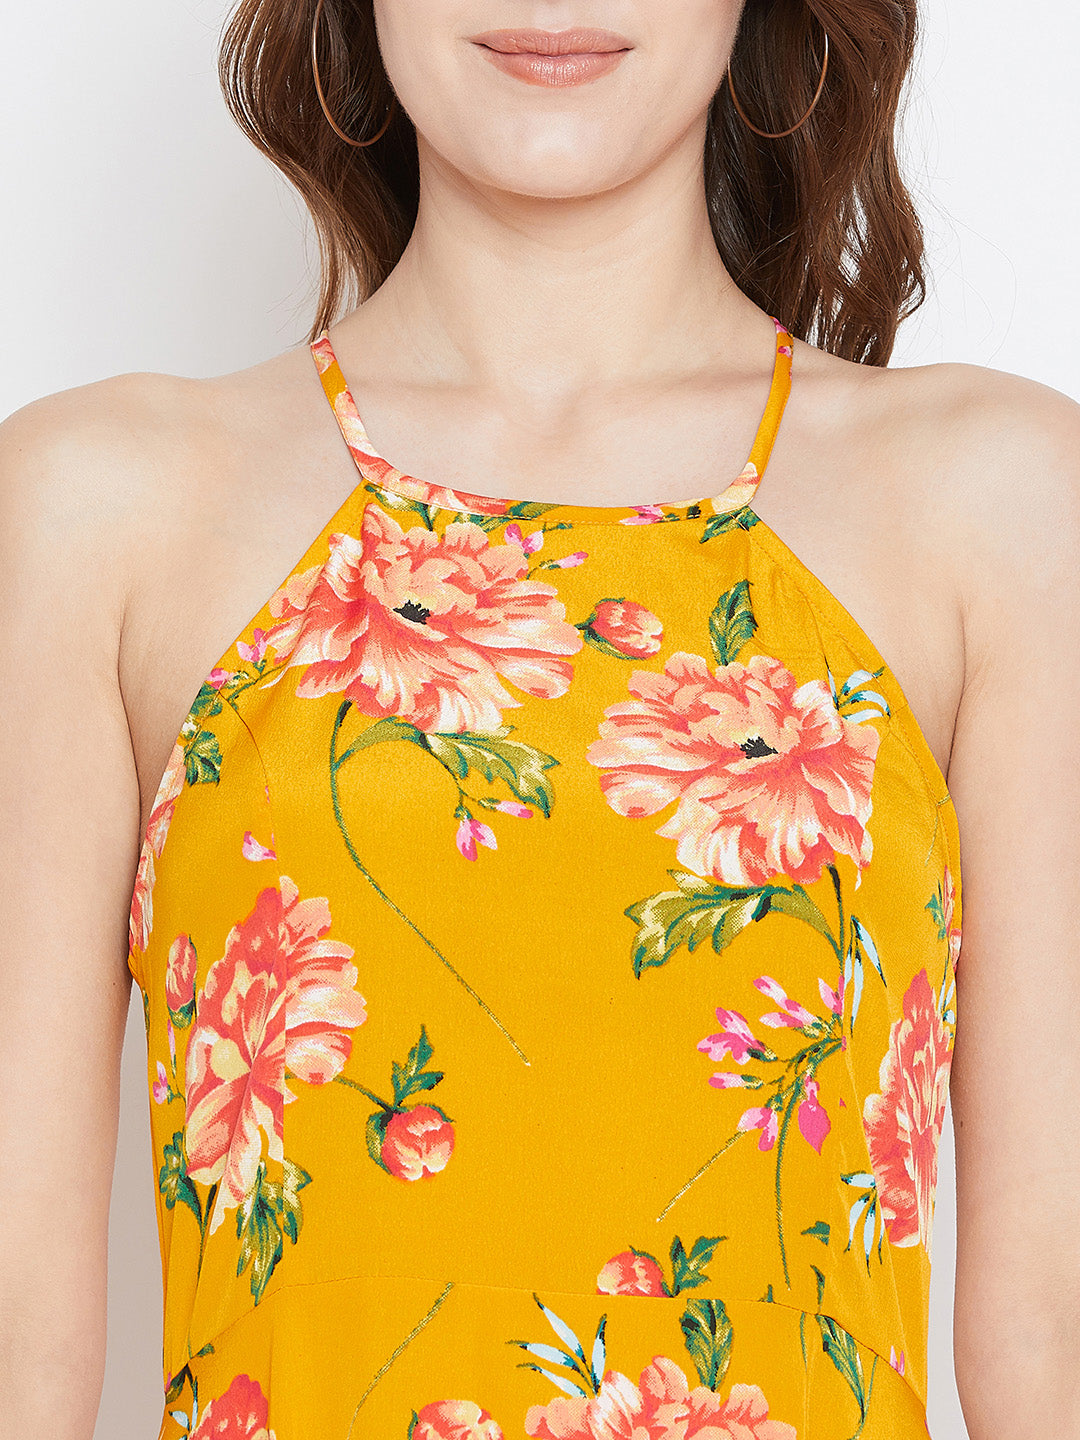 Yellow Floral Maxi Dress - Berrylush